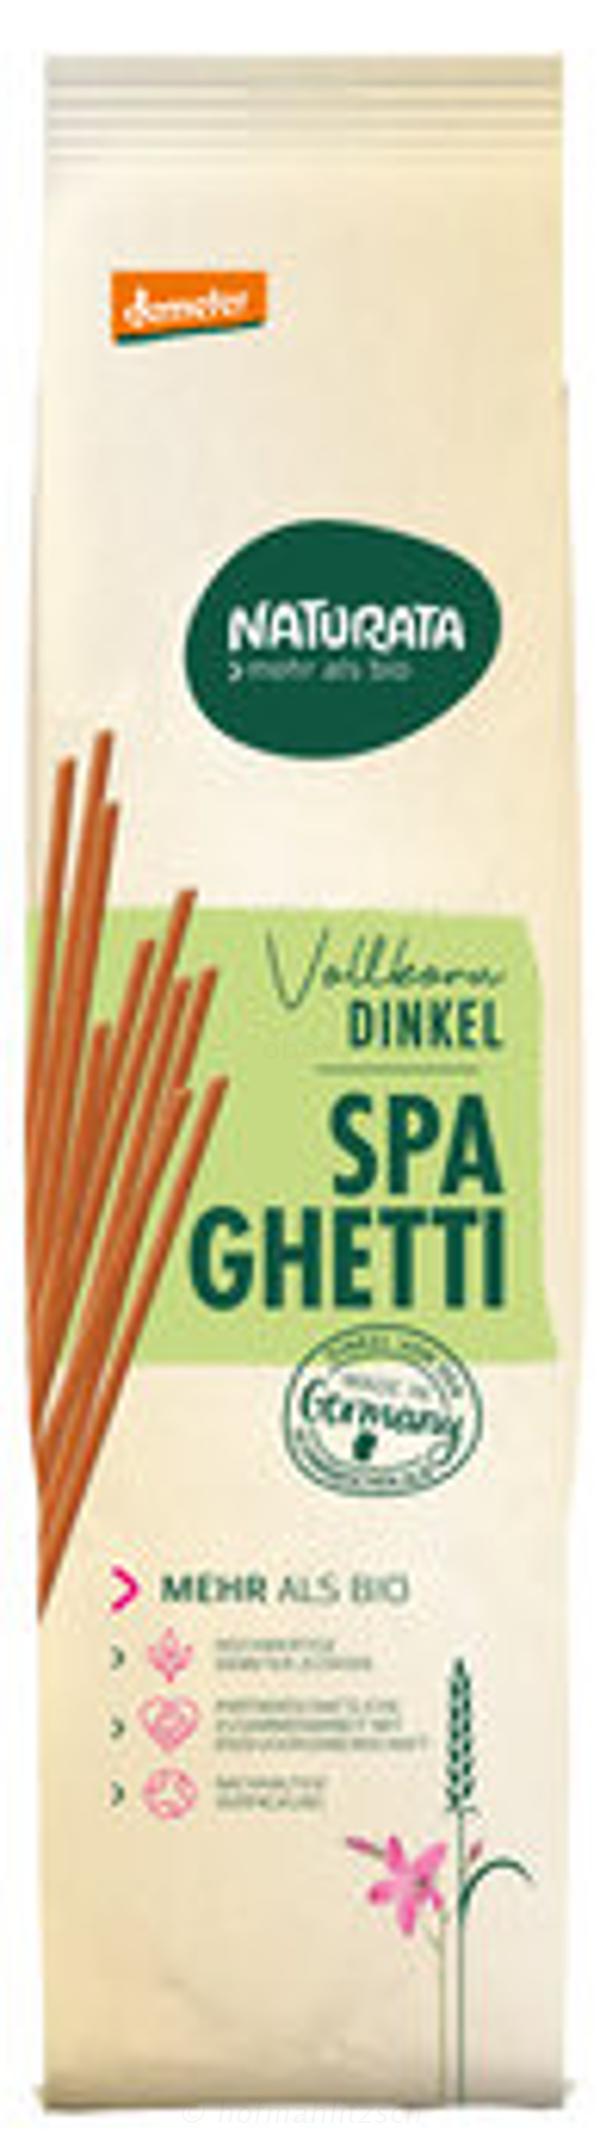 Produktfoto zu Dinkel-Spaghetti Vollkorn